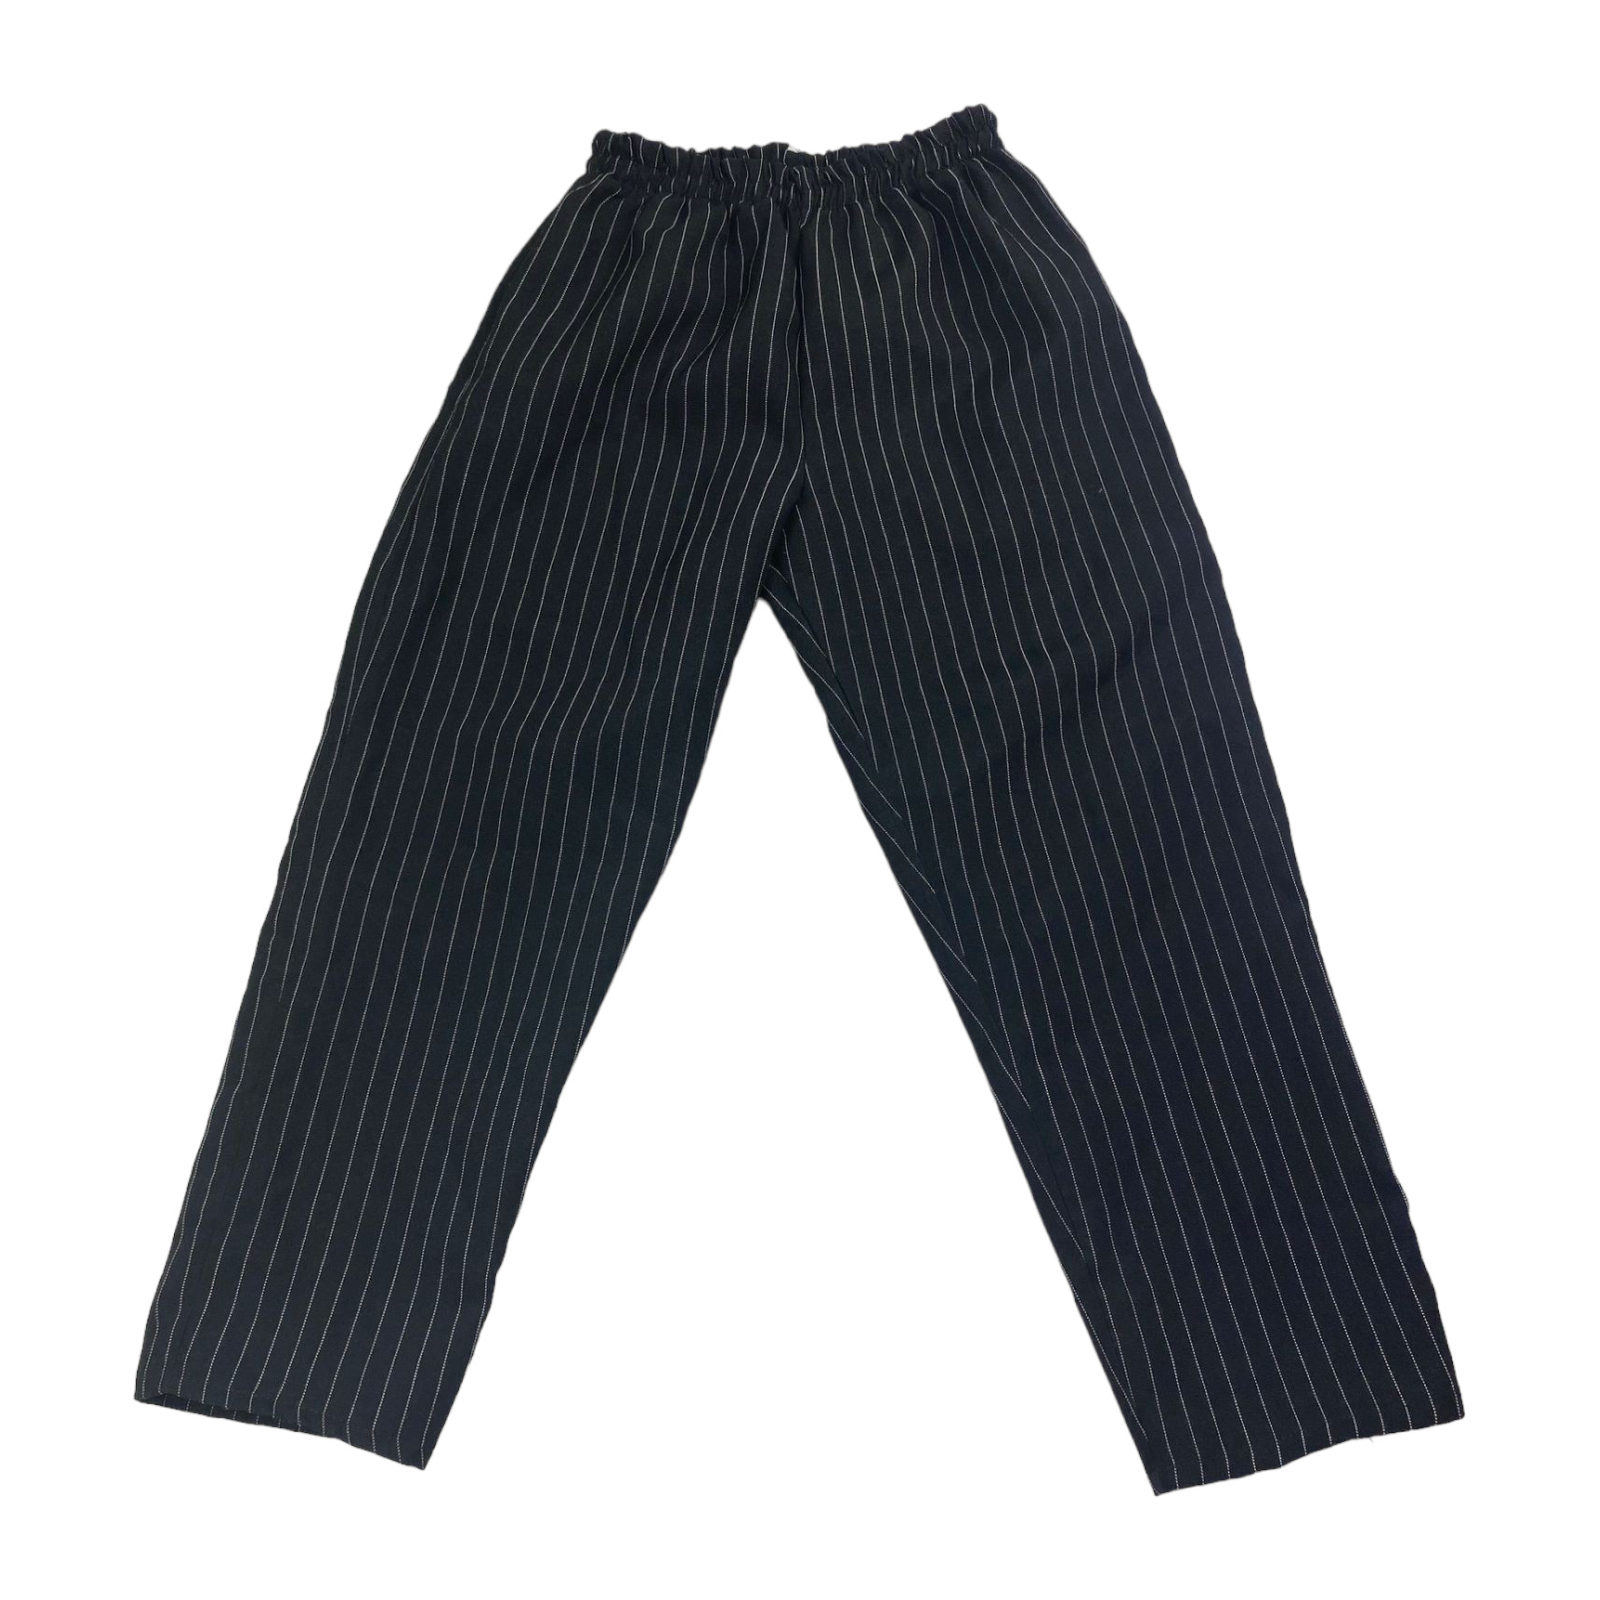 Pantalon de Huasito negro con rayas